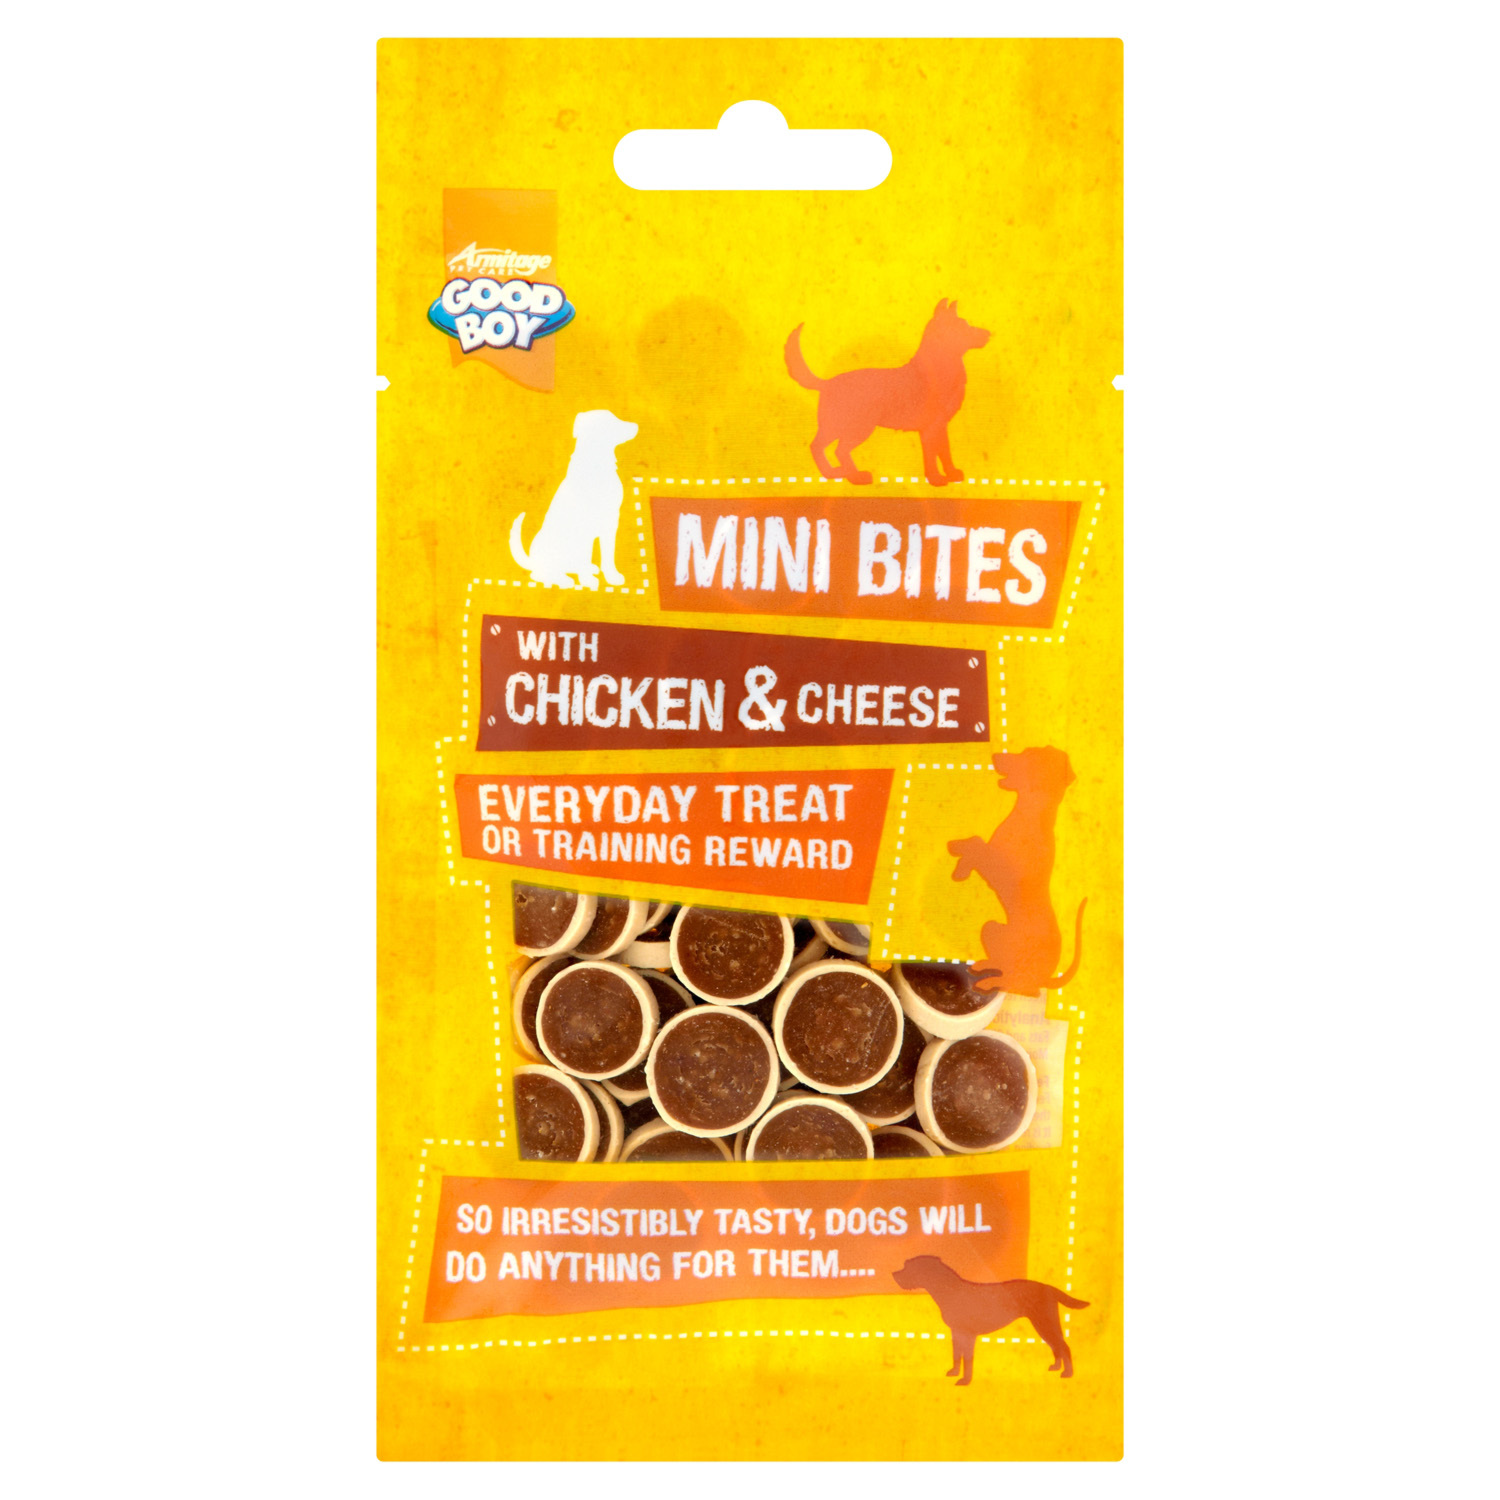 Good Boy Mini Bites - Chicken and Cheese Image